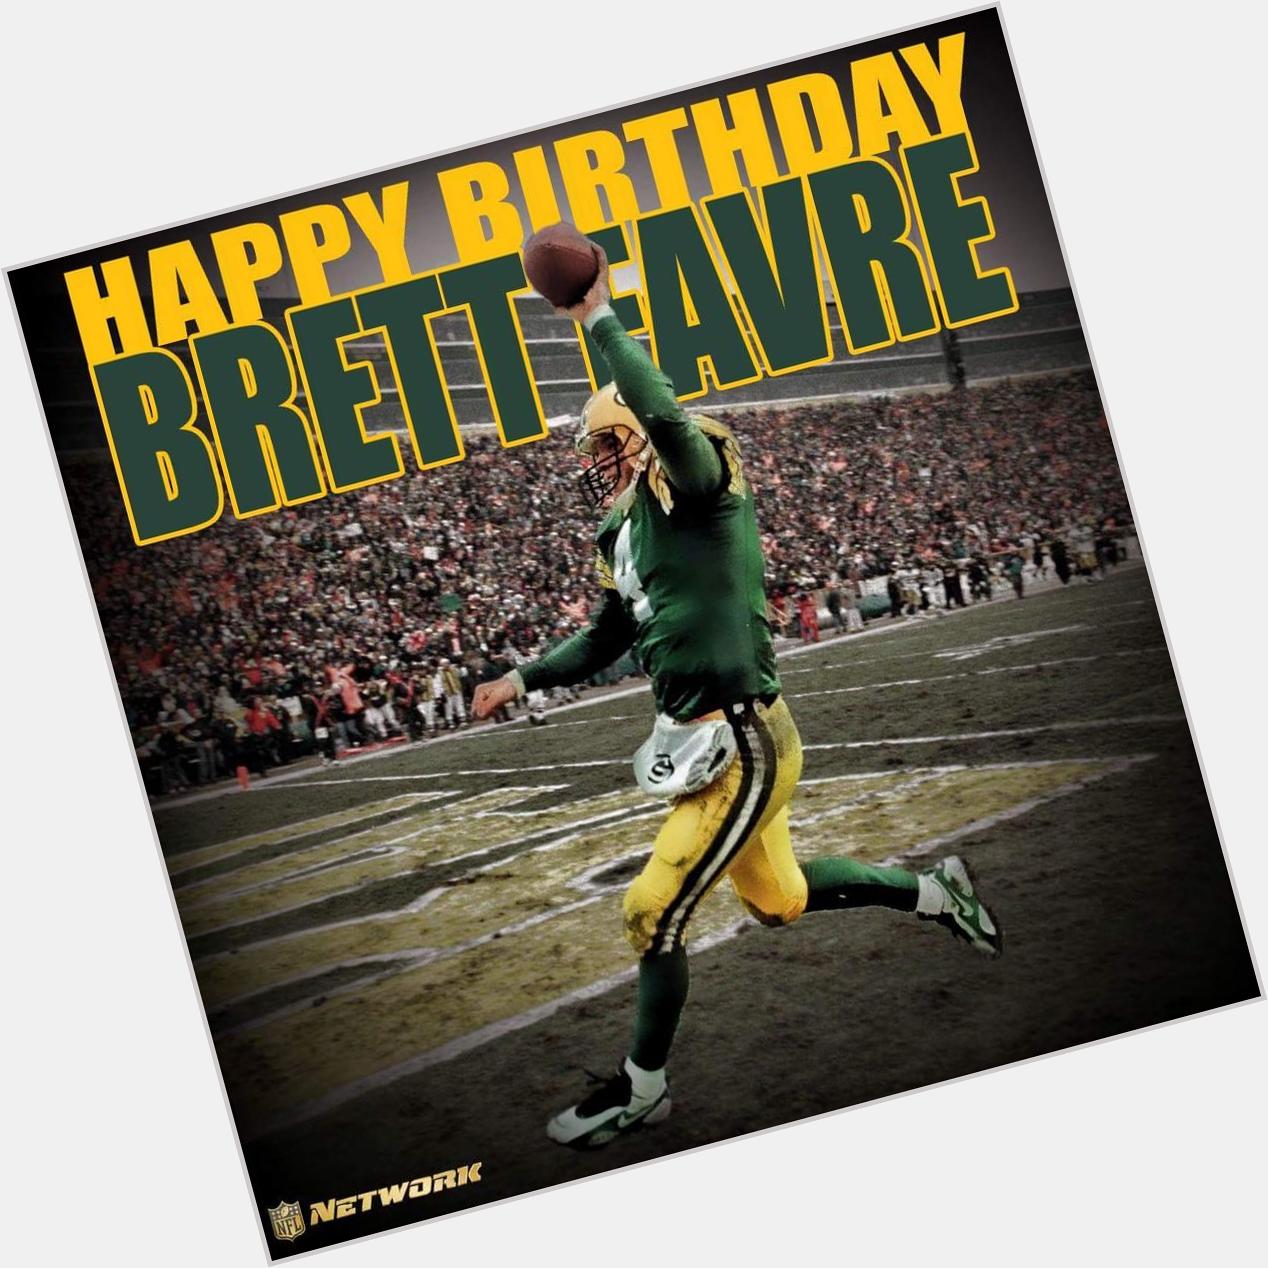 Happy birthday Brett Favre. Once a Packer always a Packer 